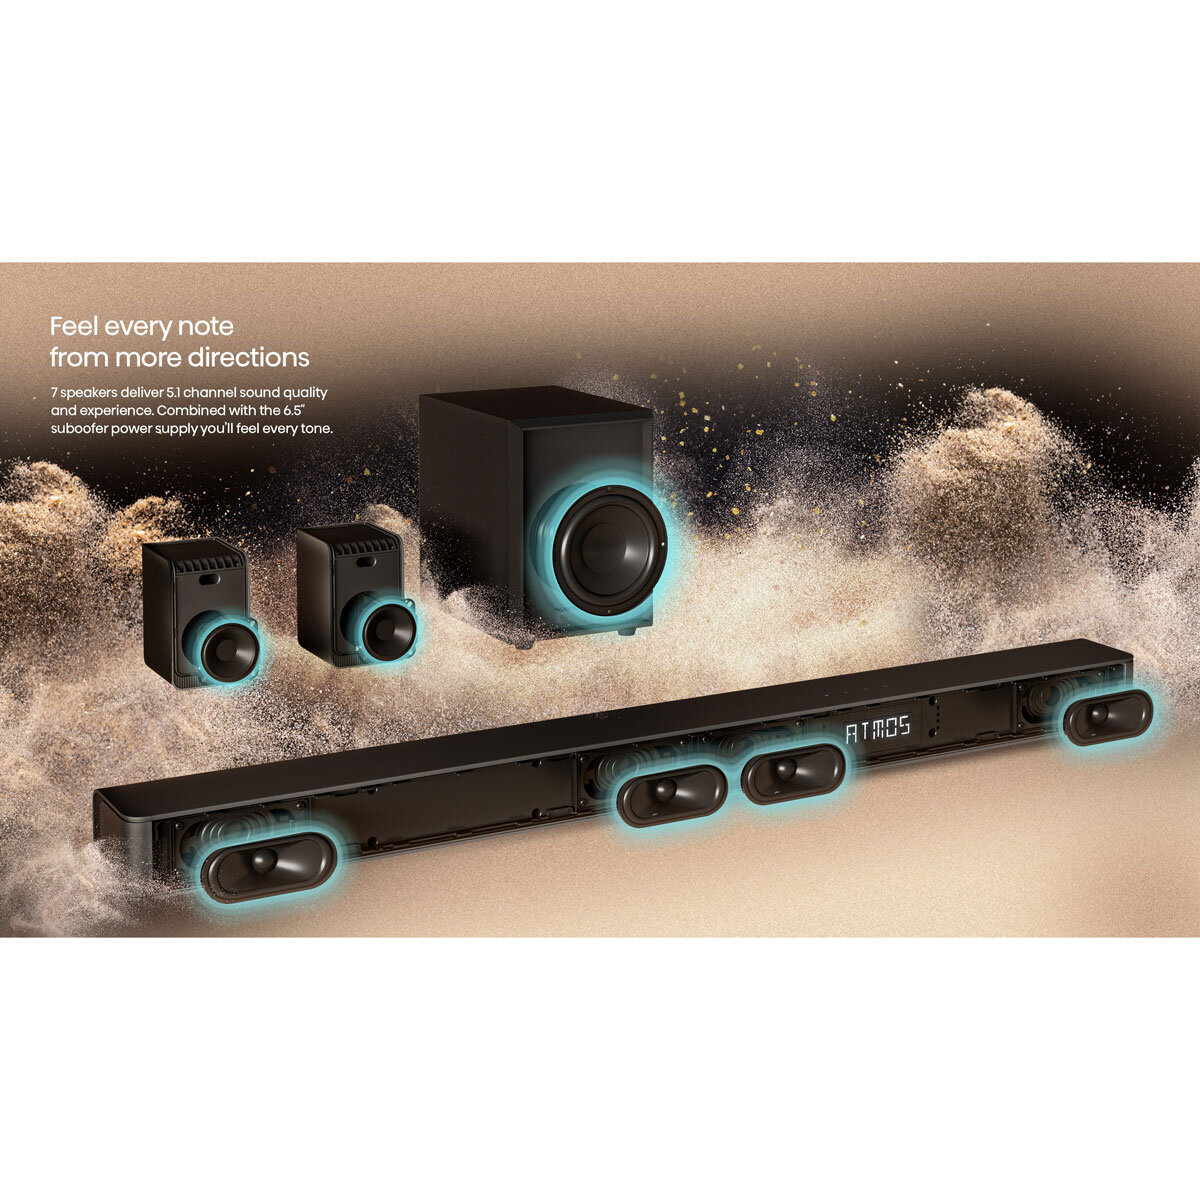 Hisense 5.1CH Dolby Atmos Sound Bar AX5100G - HiFi Corporation